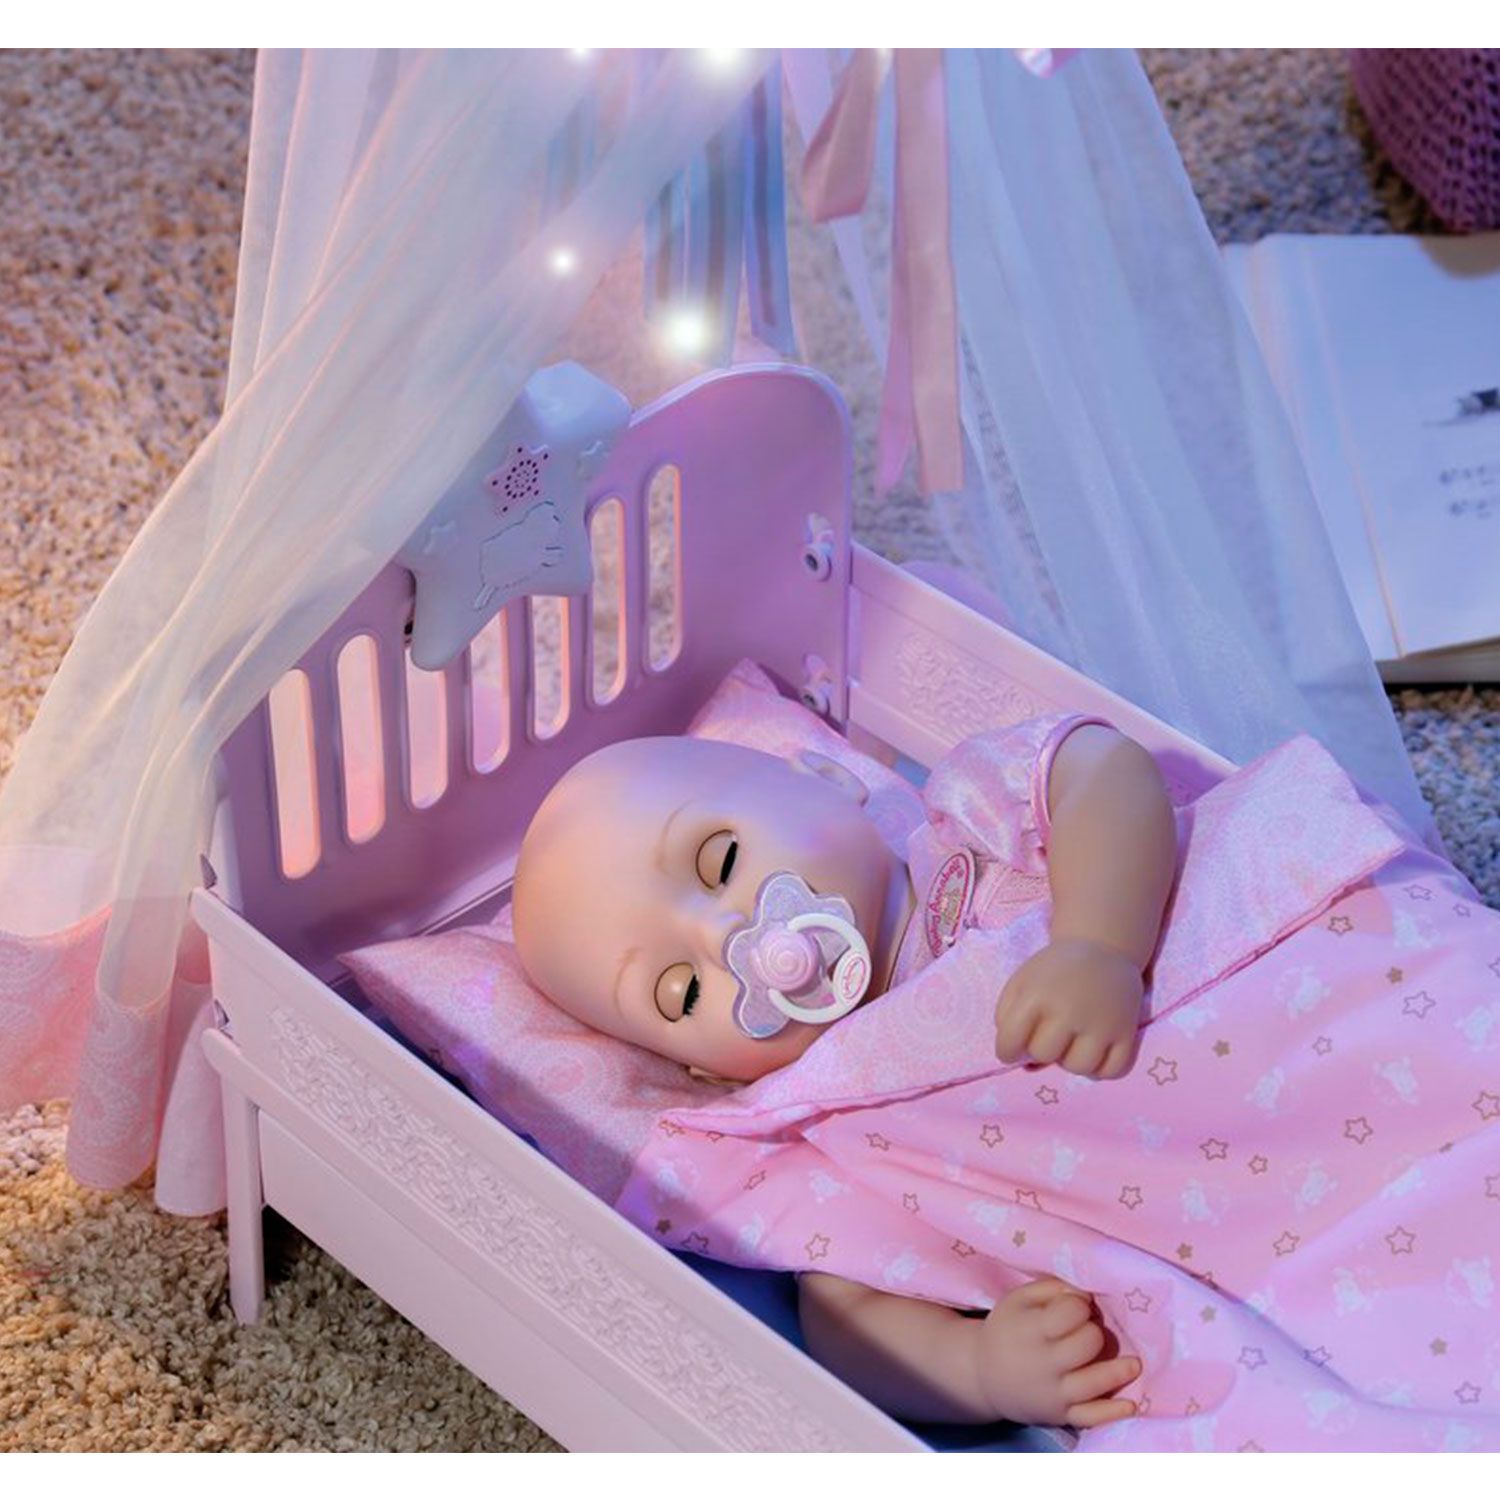 Колыбельная для куклы. Кроватка Baby Annabell сладкие сны. Кукла Беби Бон Анабель. Zapf Creation кроватка для куклы Baby Annabell. Кроватка спокойной ночи бэби Аннабель.